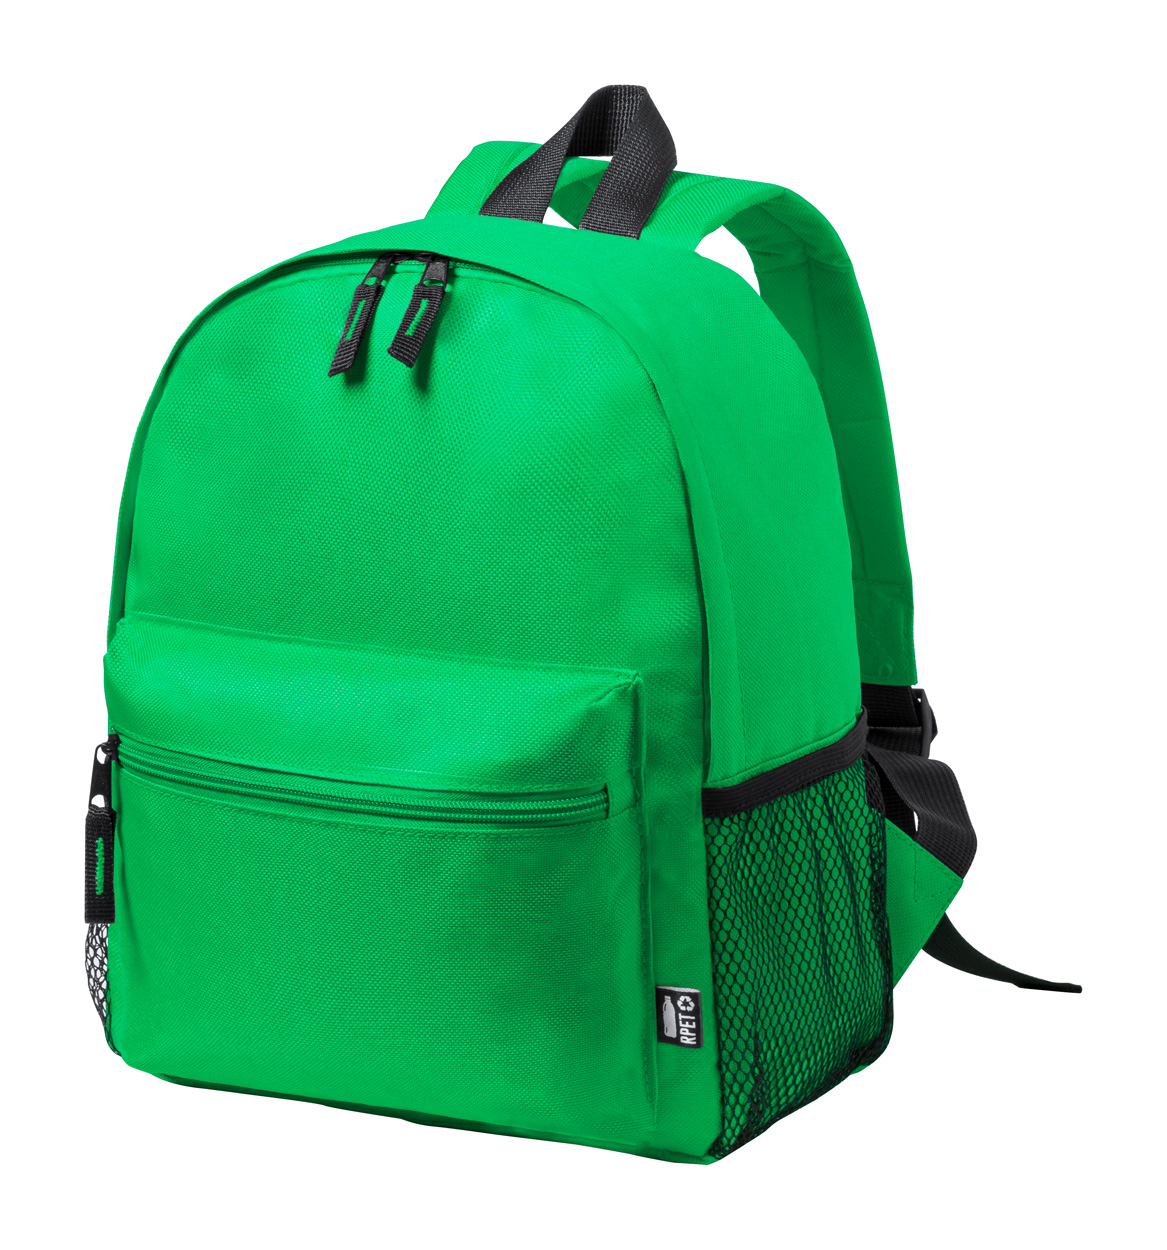 Maggie RPET backpack for children - green